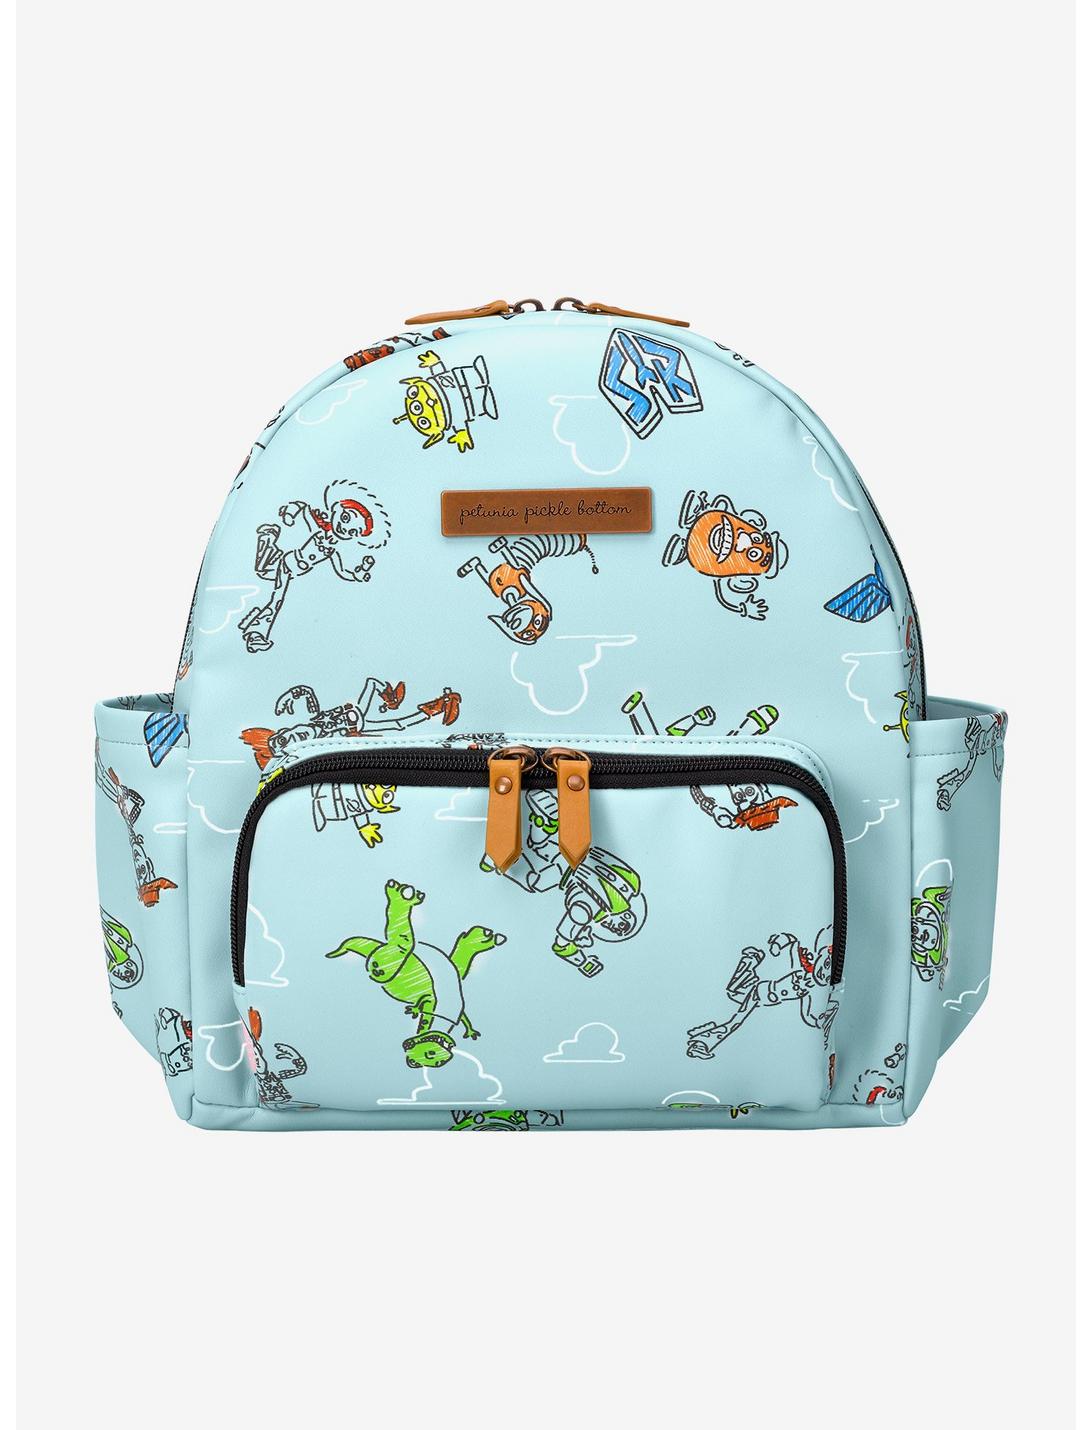 Petunia Pickle Bottom Pixar Toy Story Mini Backpack, , hi-res